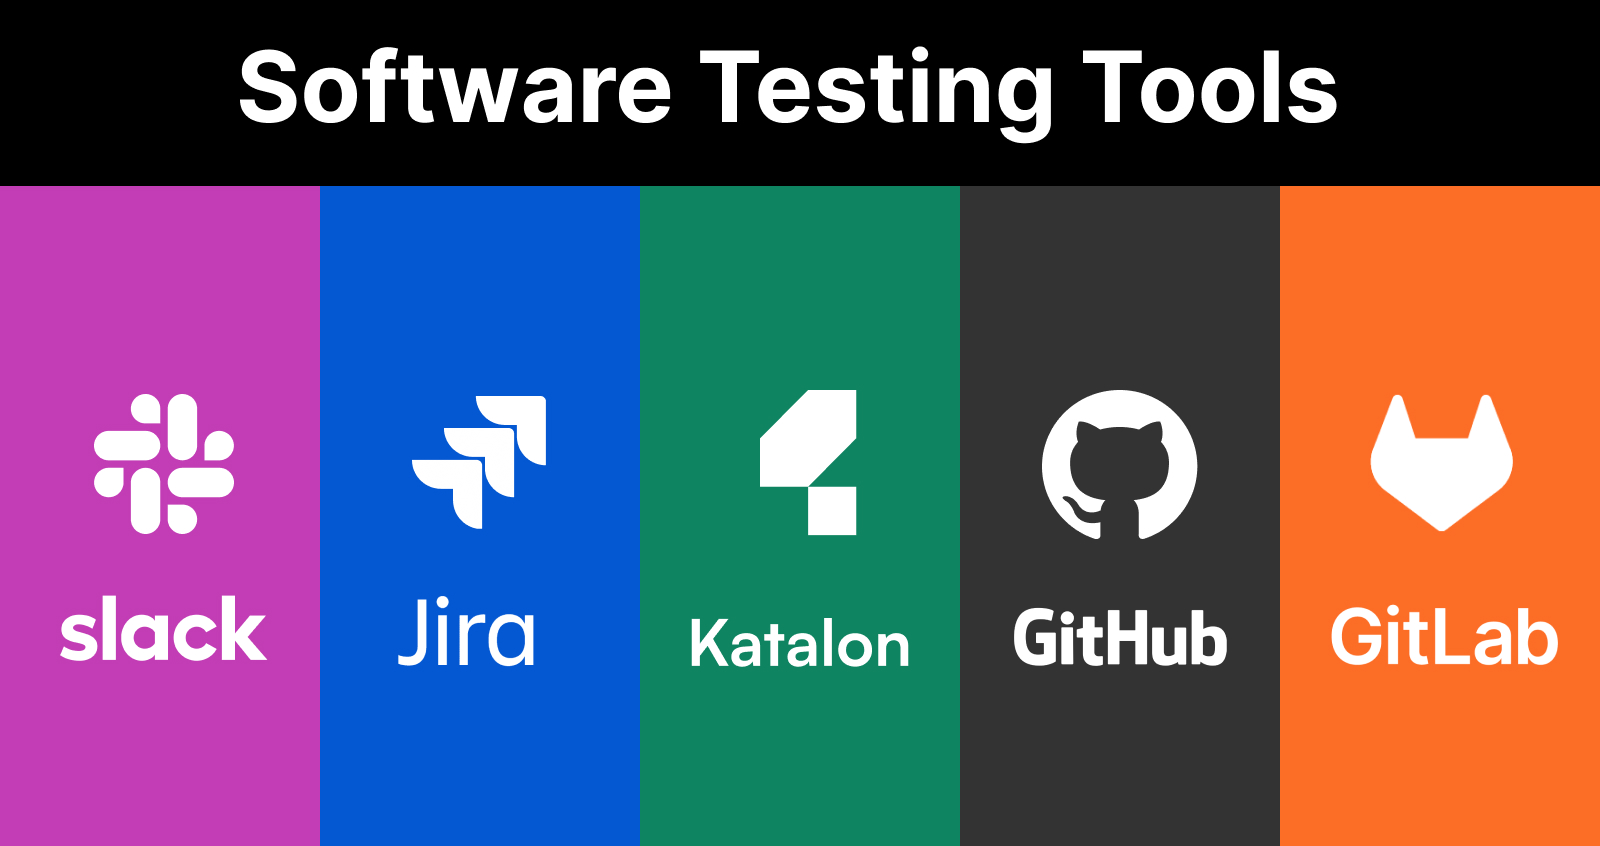 Popular software testing tools